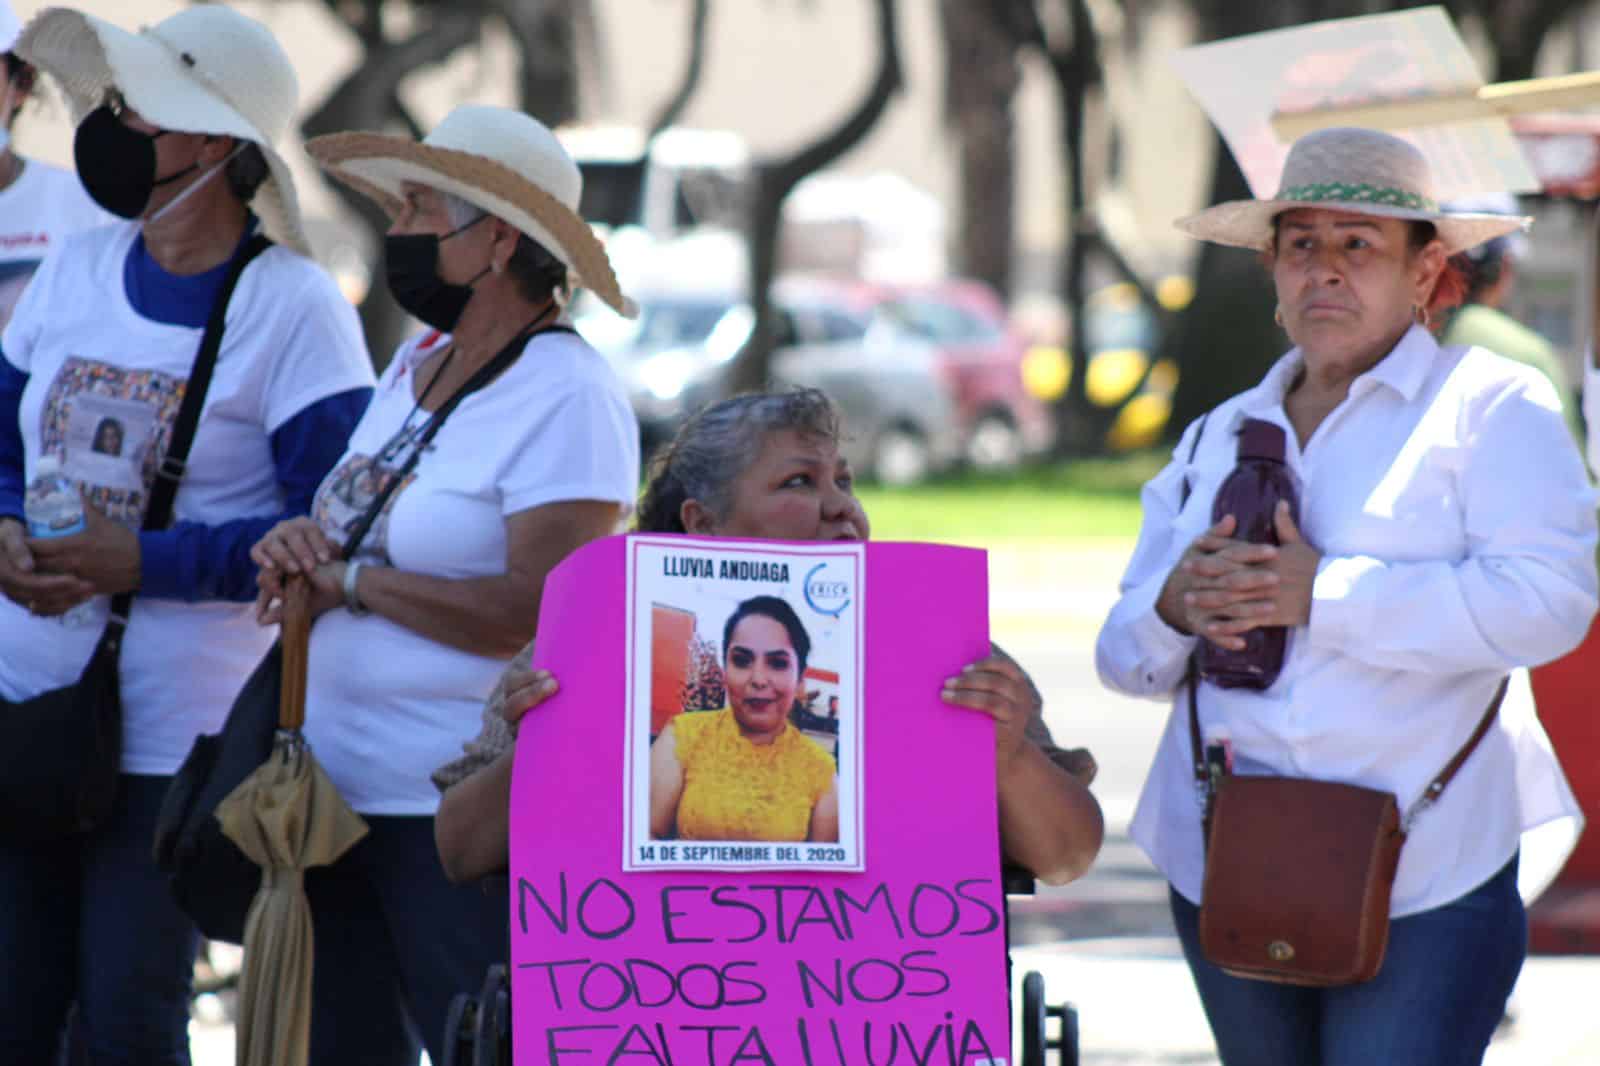 Se reúnen en Tijuana para una marcha pacífica para pedir a las autoridades apoyo para localizar a desaparecidos